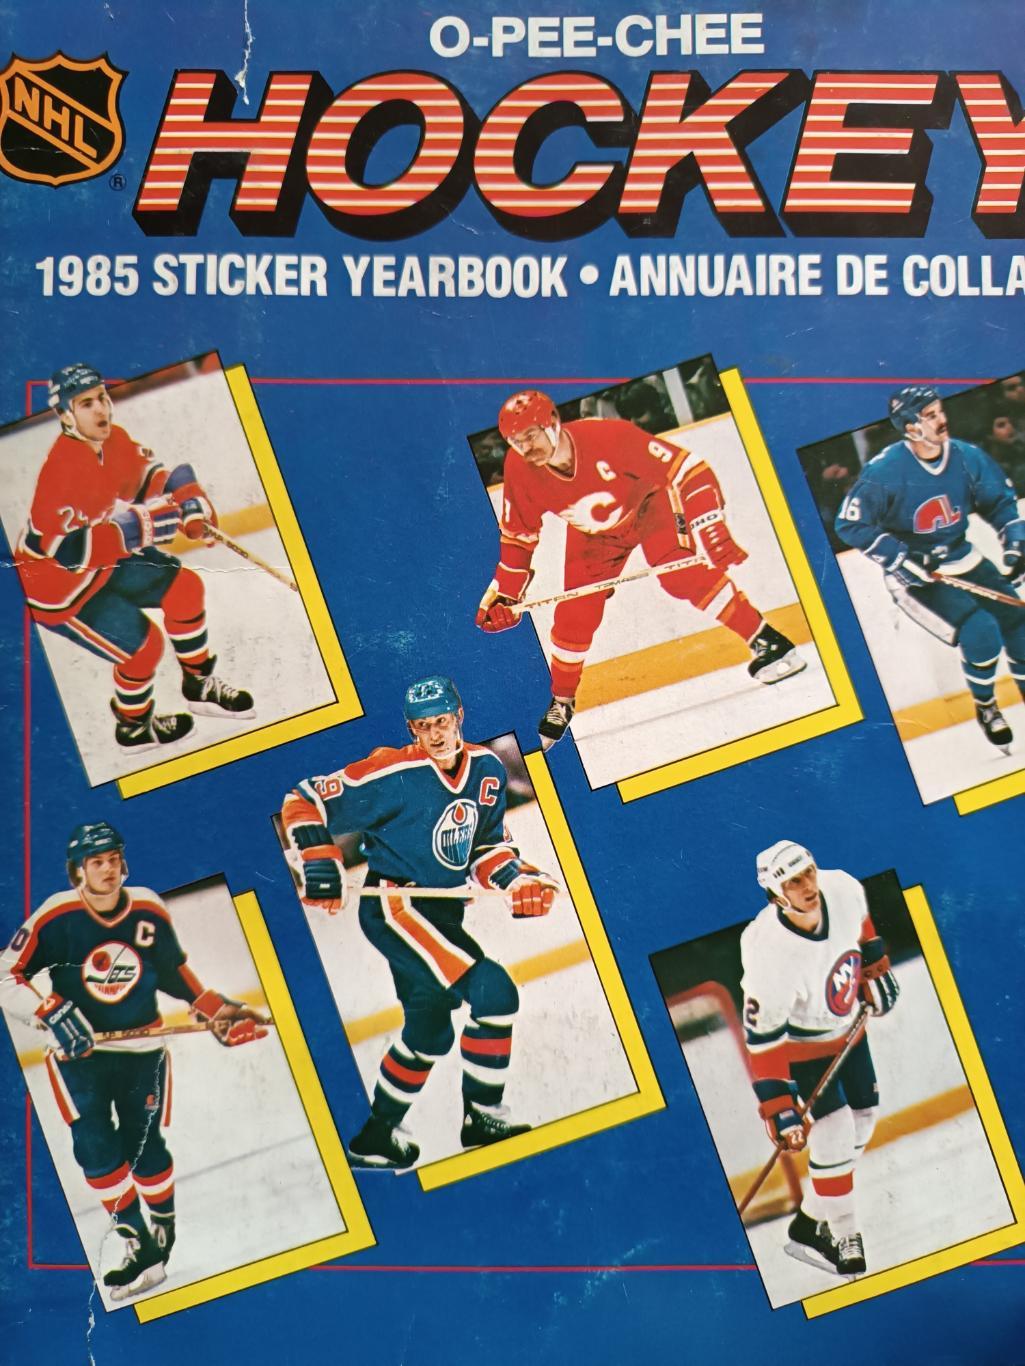 ХОККЕЙ АЛЬБОМ НАКЛЕЕК НХЛ О ПИИ ЧИИ 1985 NHL O-PEE-CHEE STICKER ALBUM